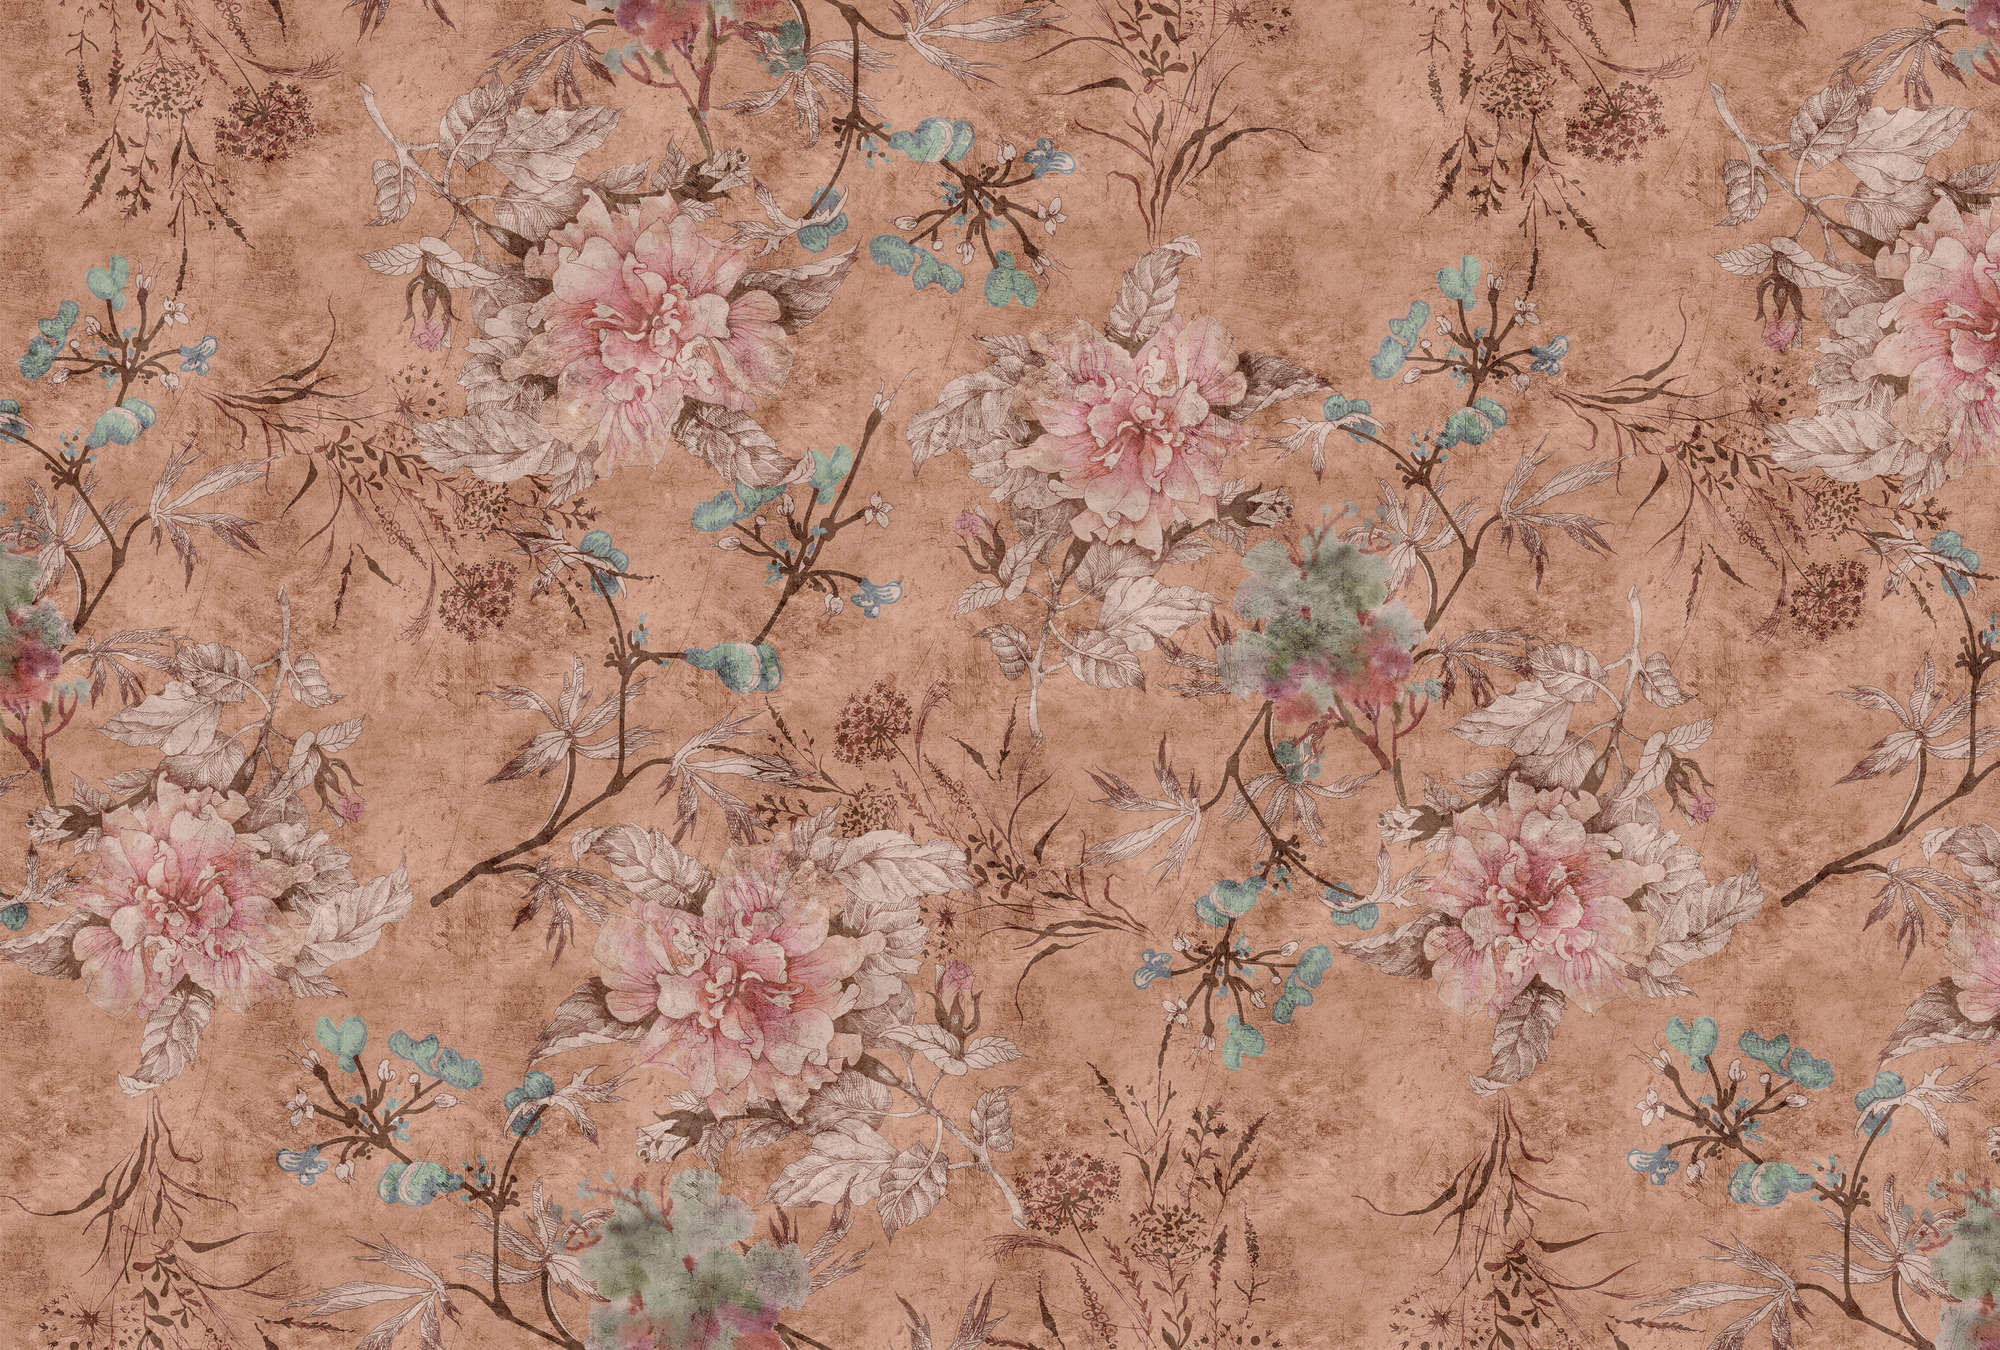             Tenderblossom 3 - Papel pintado digital estampado floral estilo vintage - Rosa, Rojo | Perla liso no tejido
        